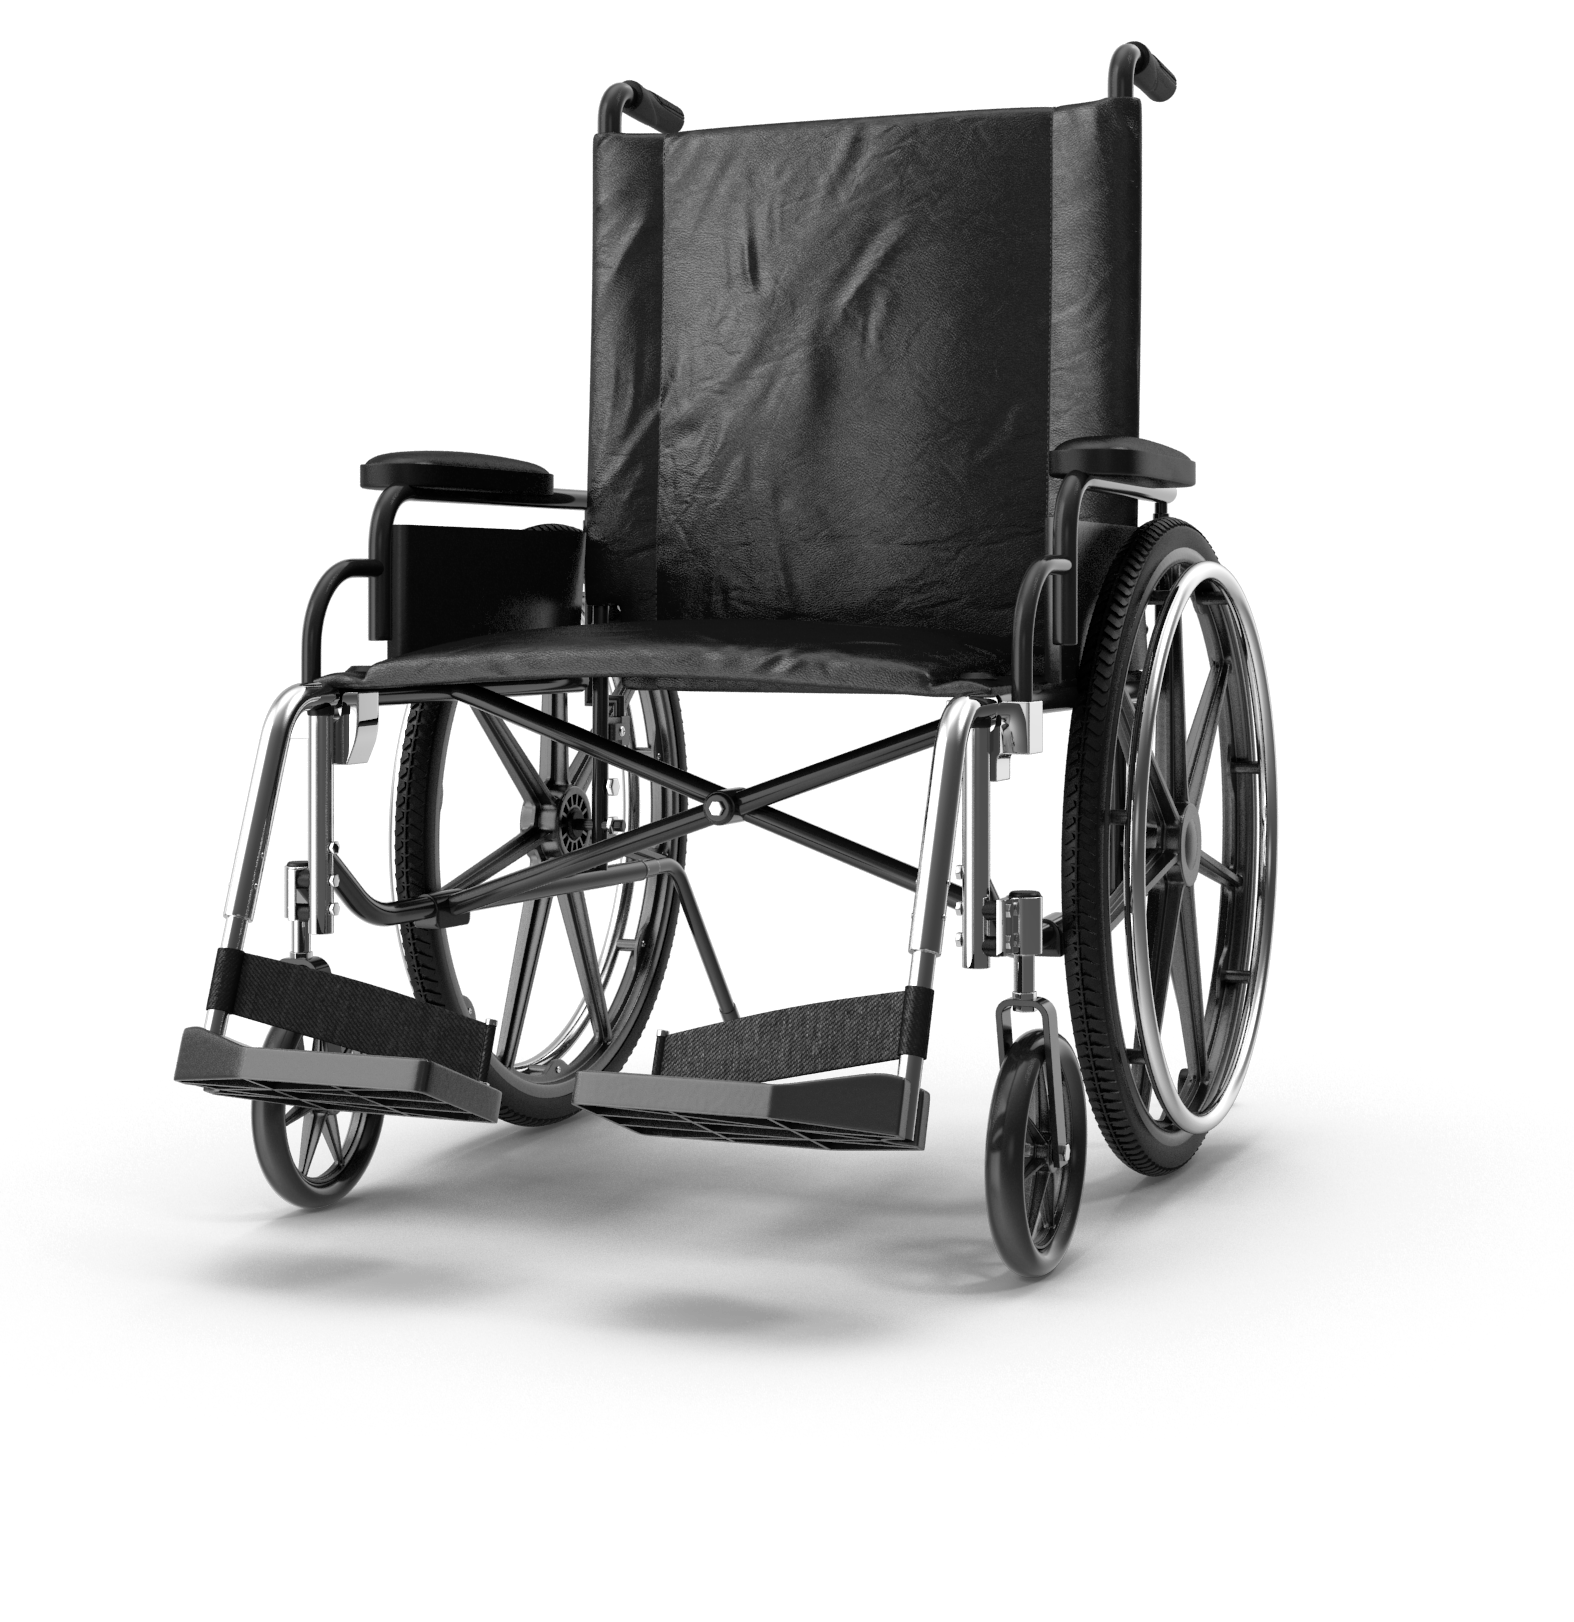 Standard Manual Wheelchair